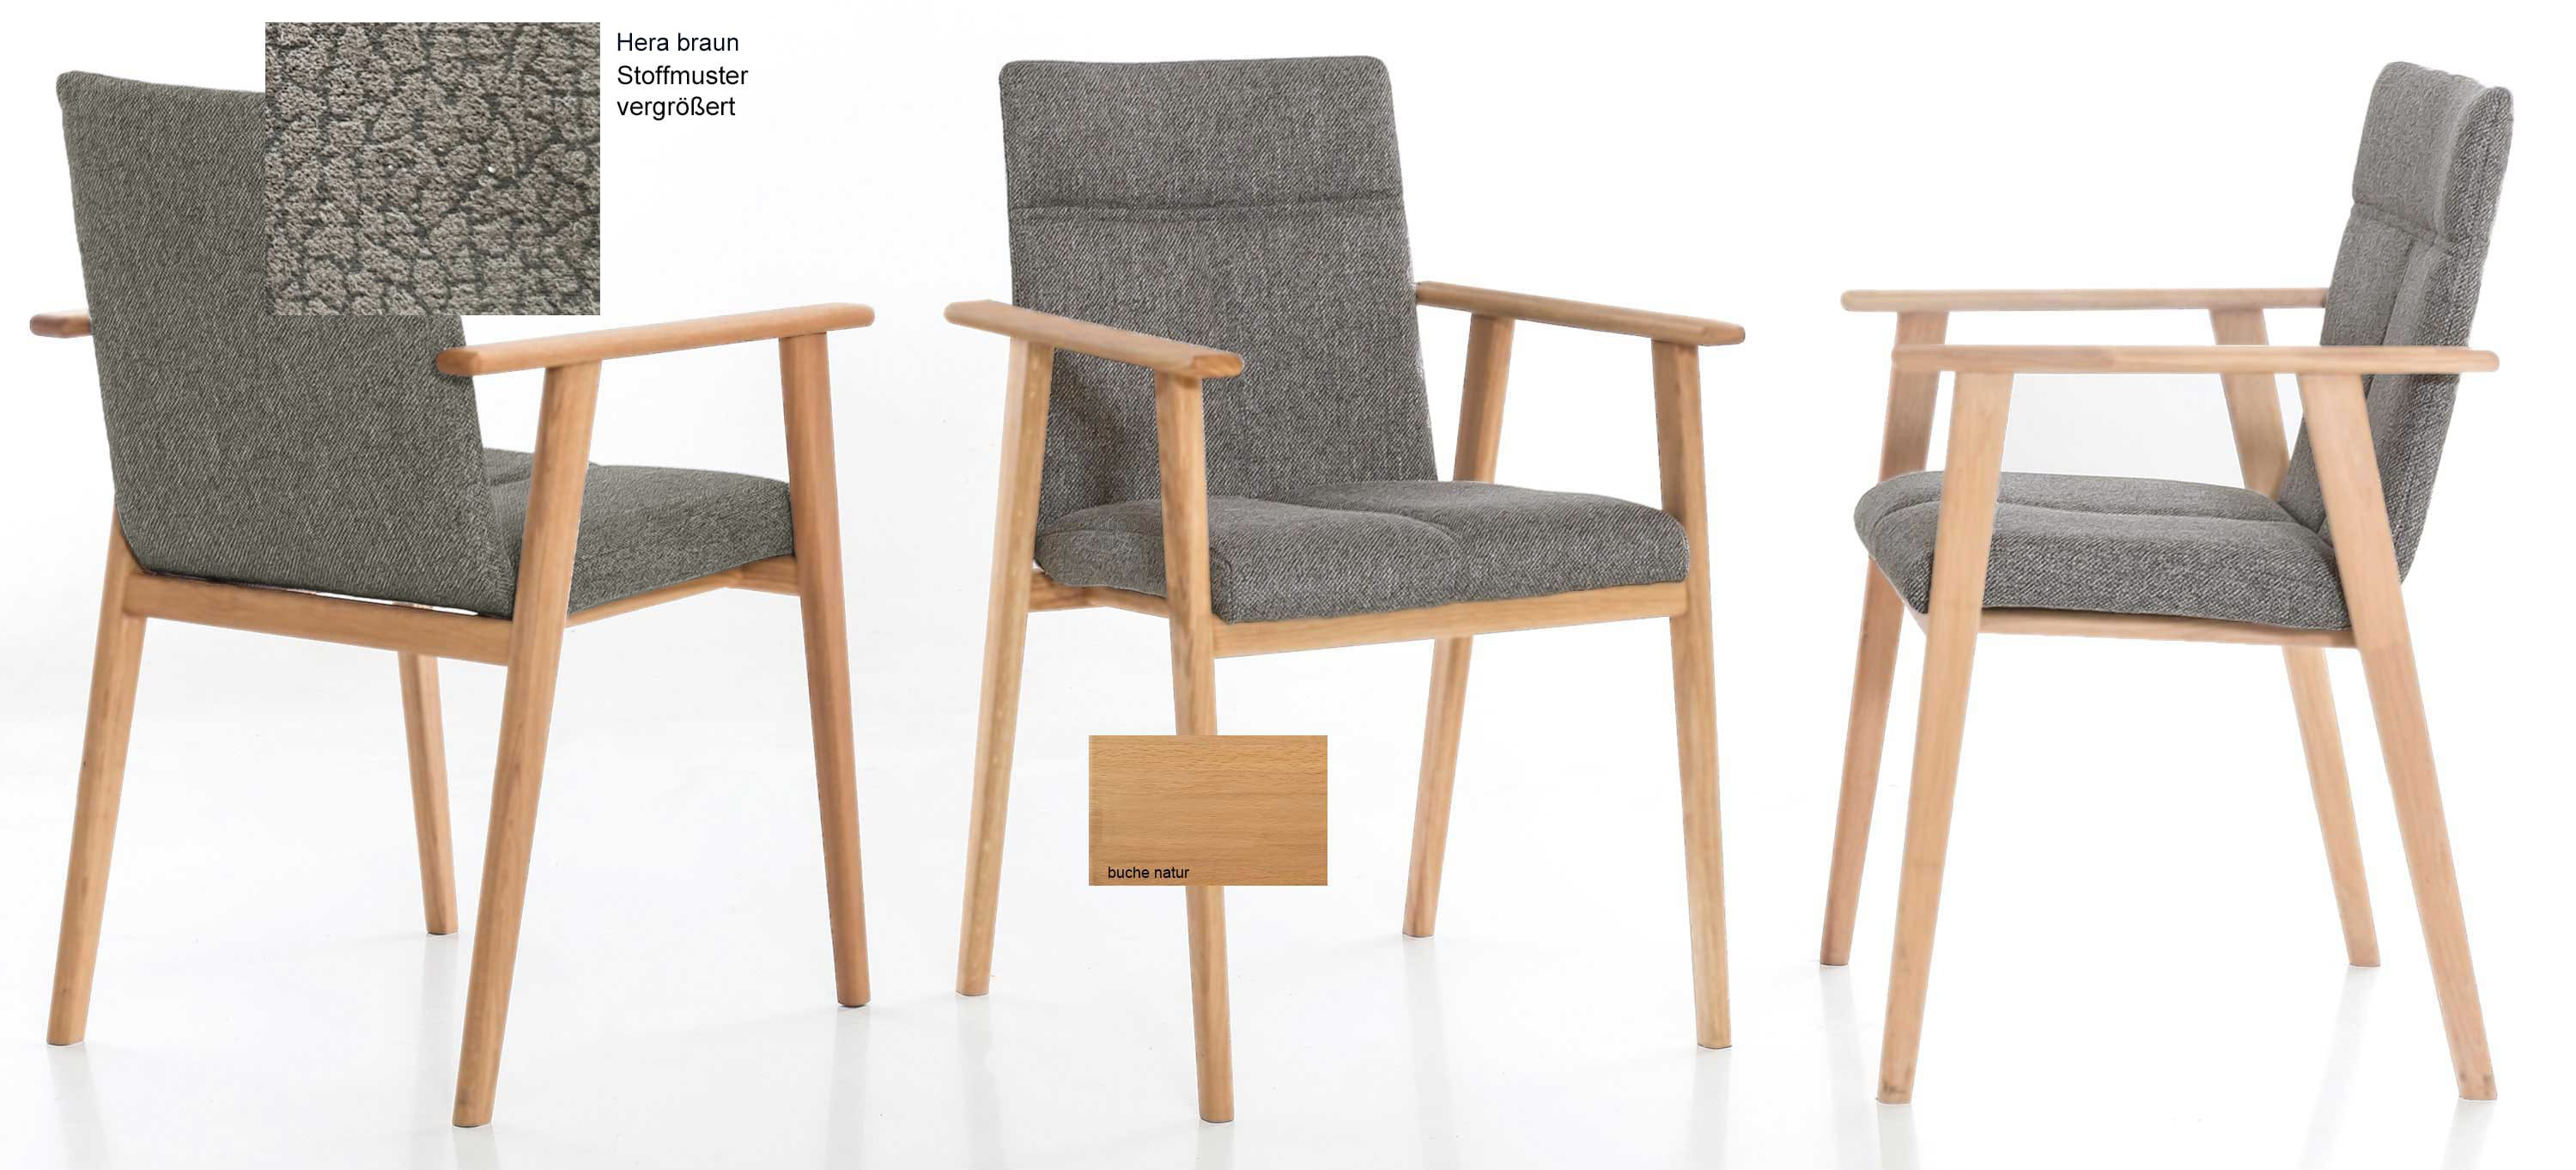 Standard Furniture Arona Armlehnstuhl buche / JHera braun